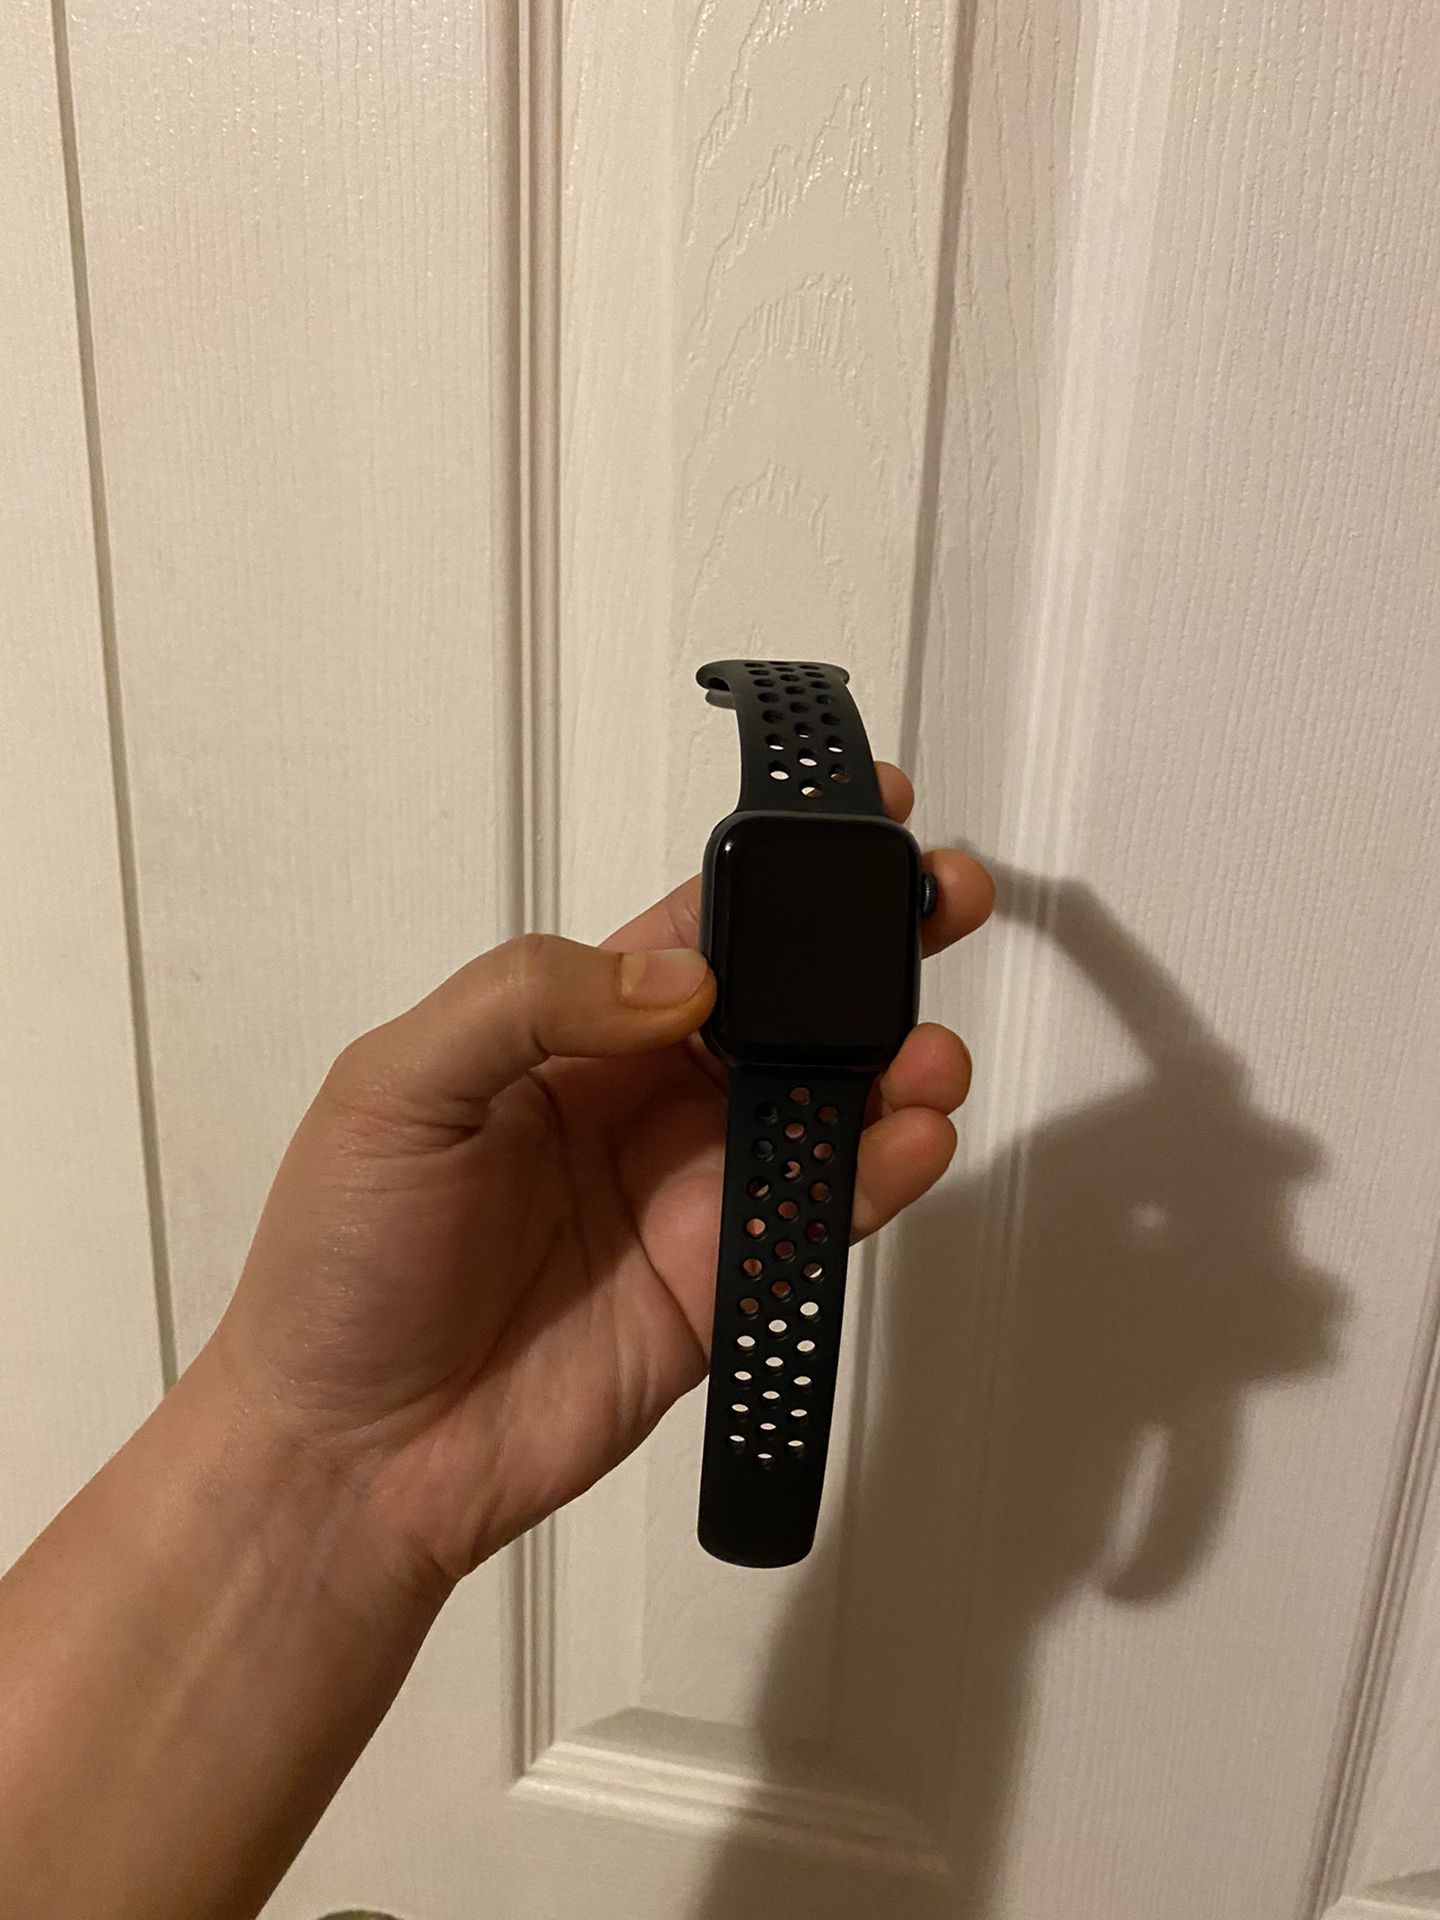 Series 4 Apple Watch